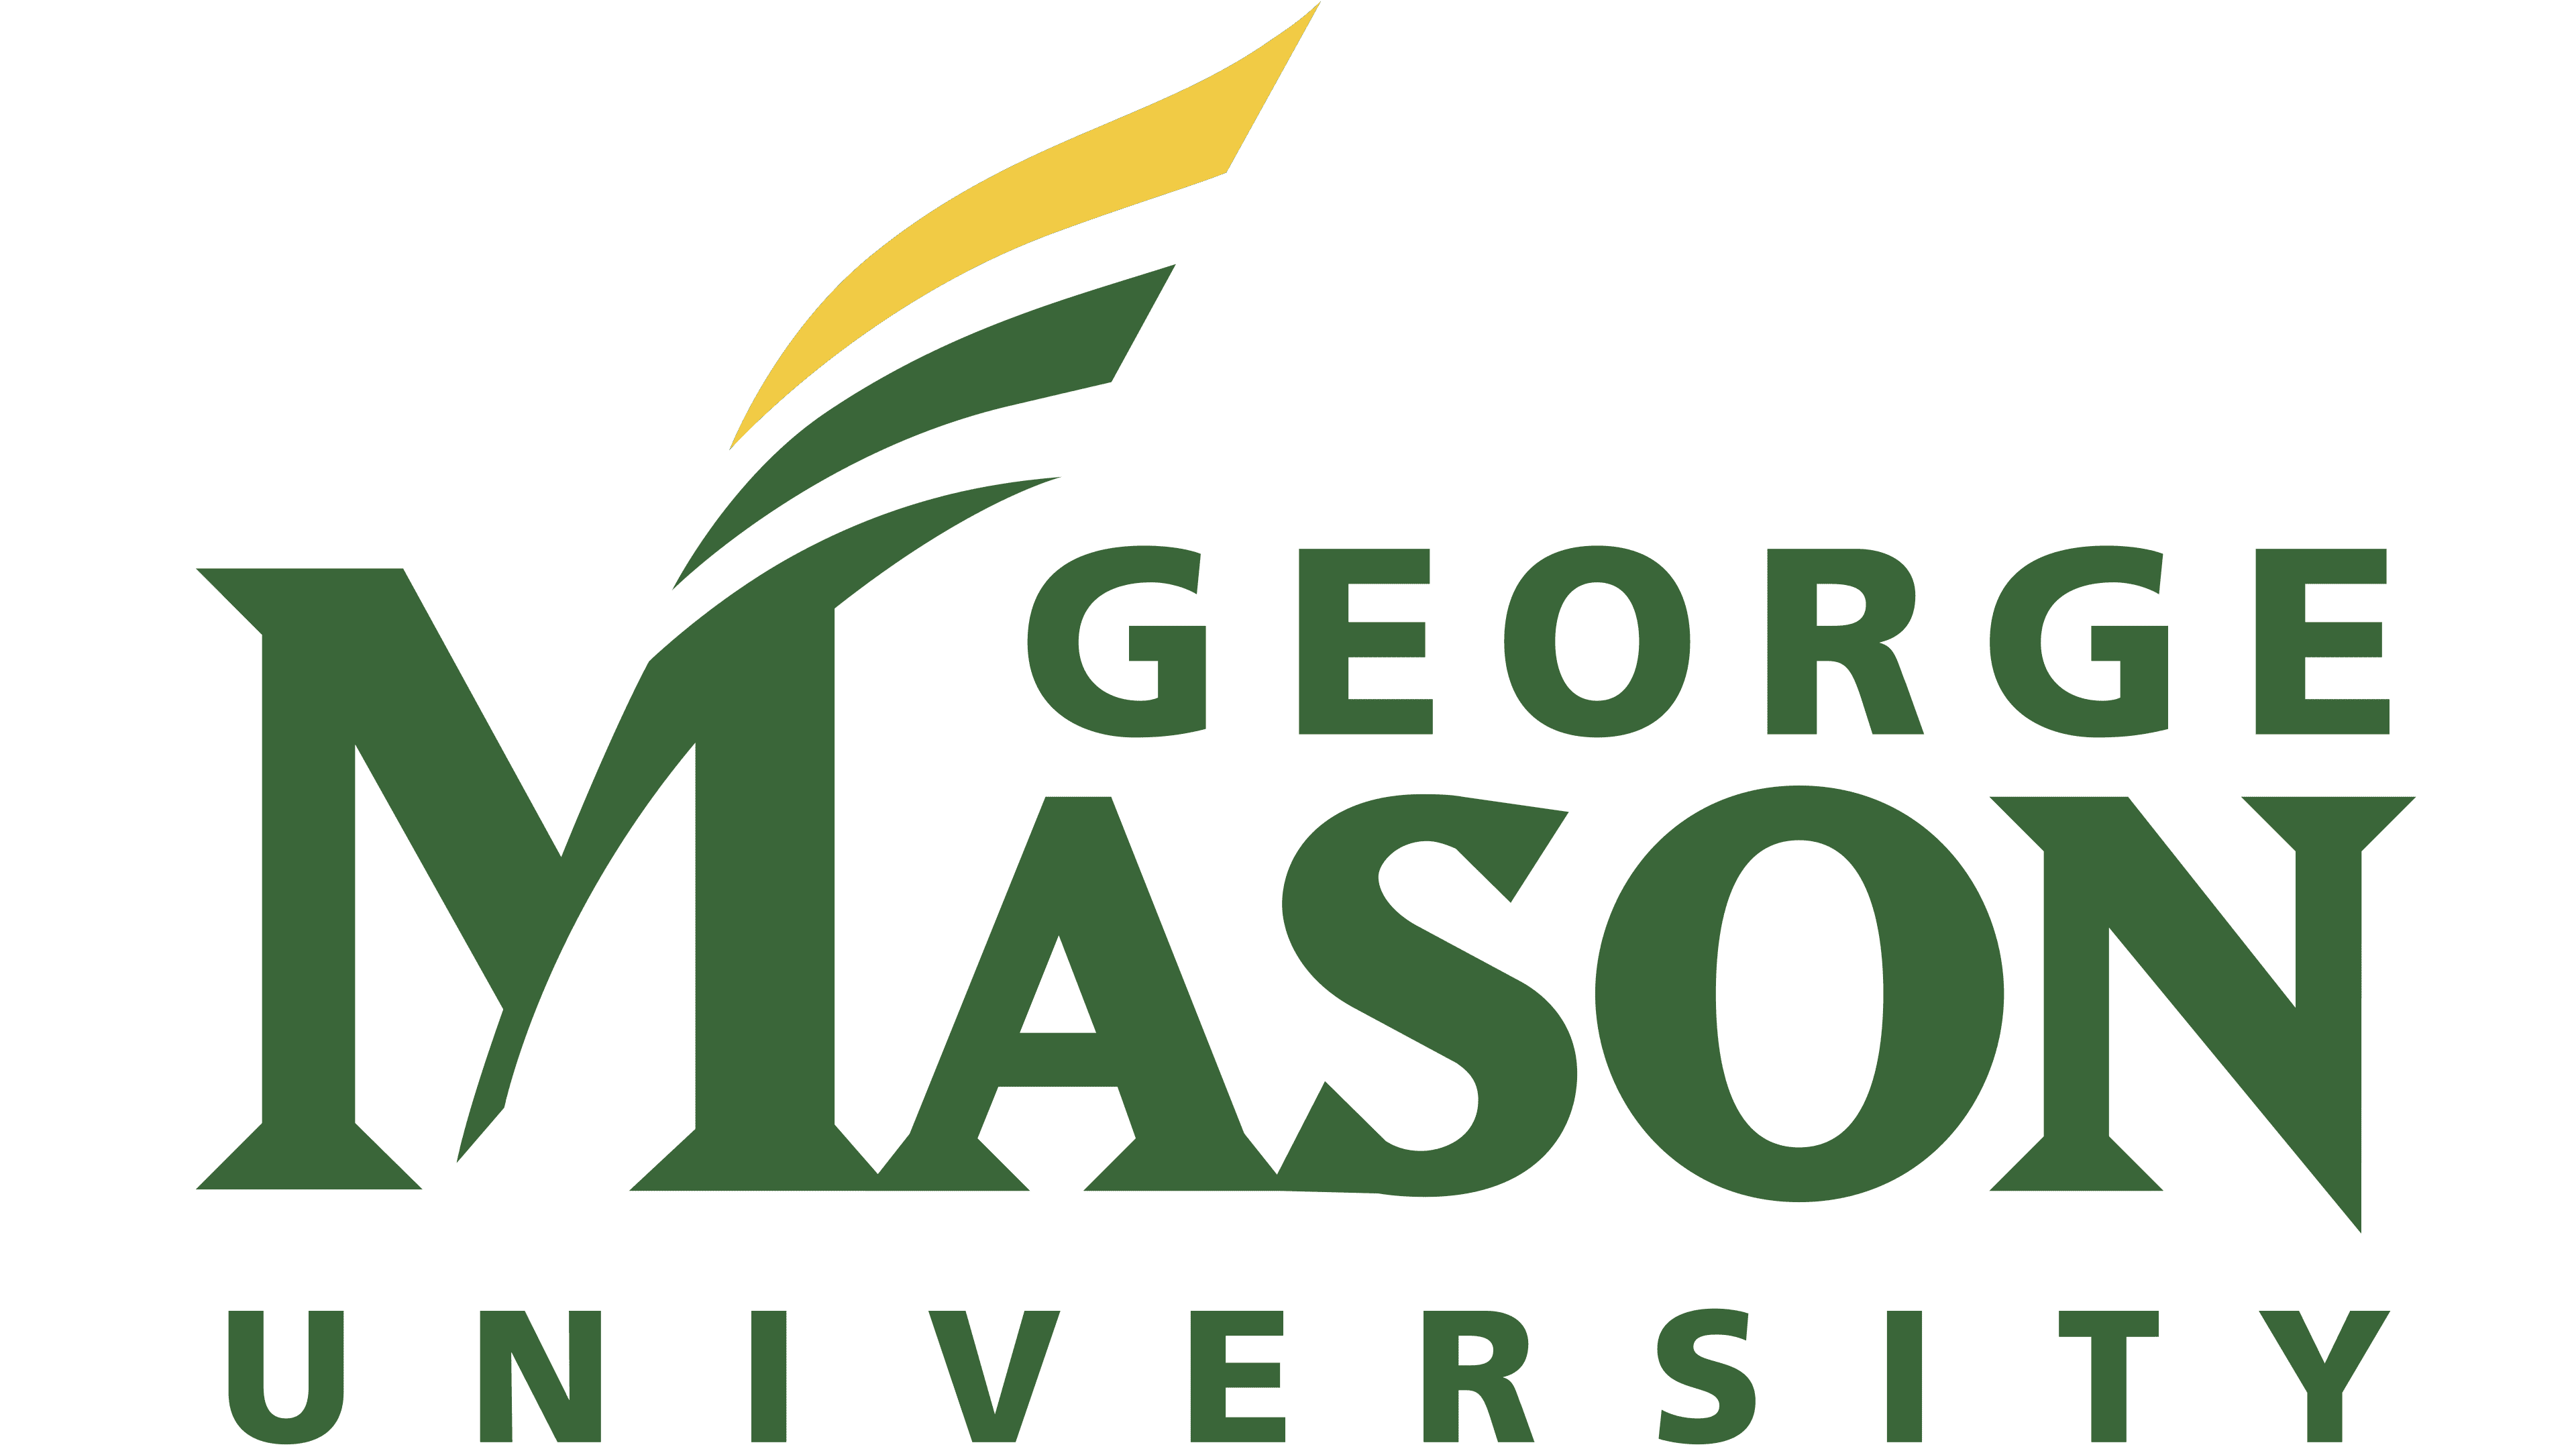 George Mason University Transparent Logo PNG